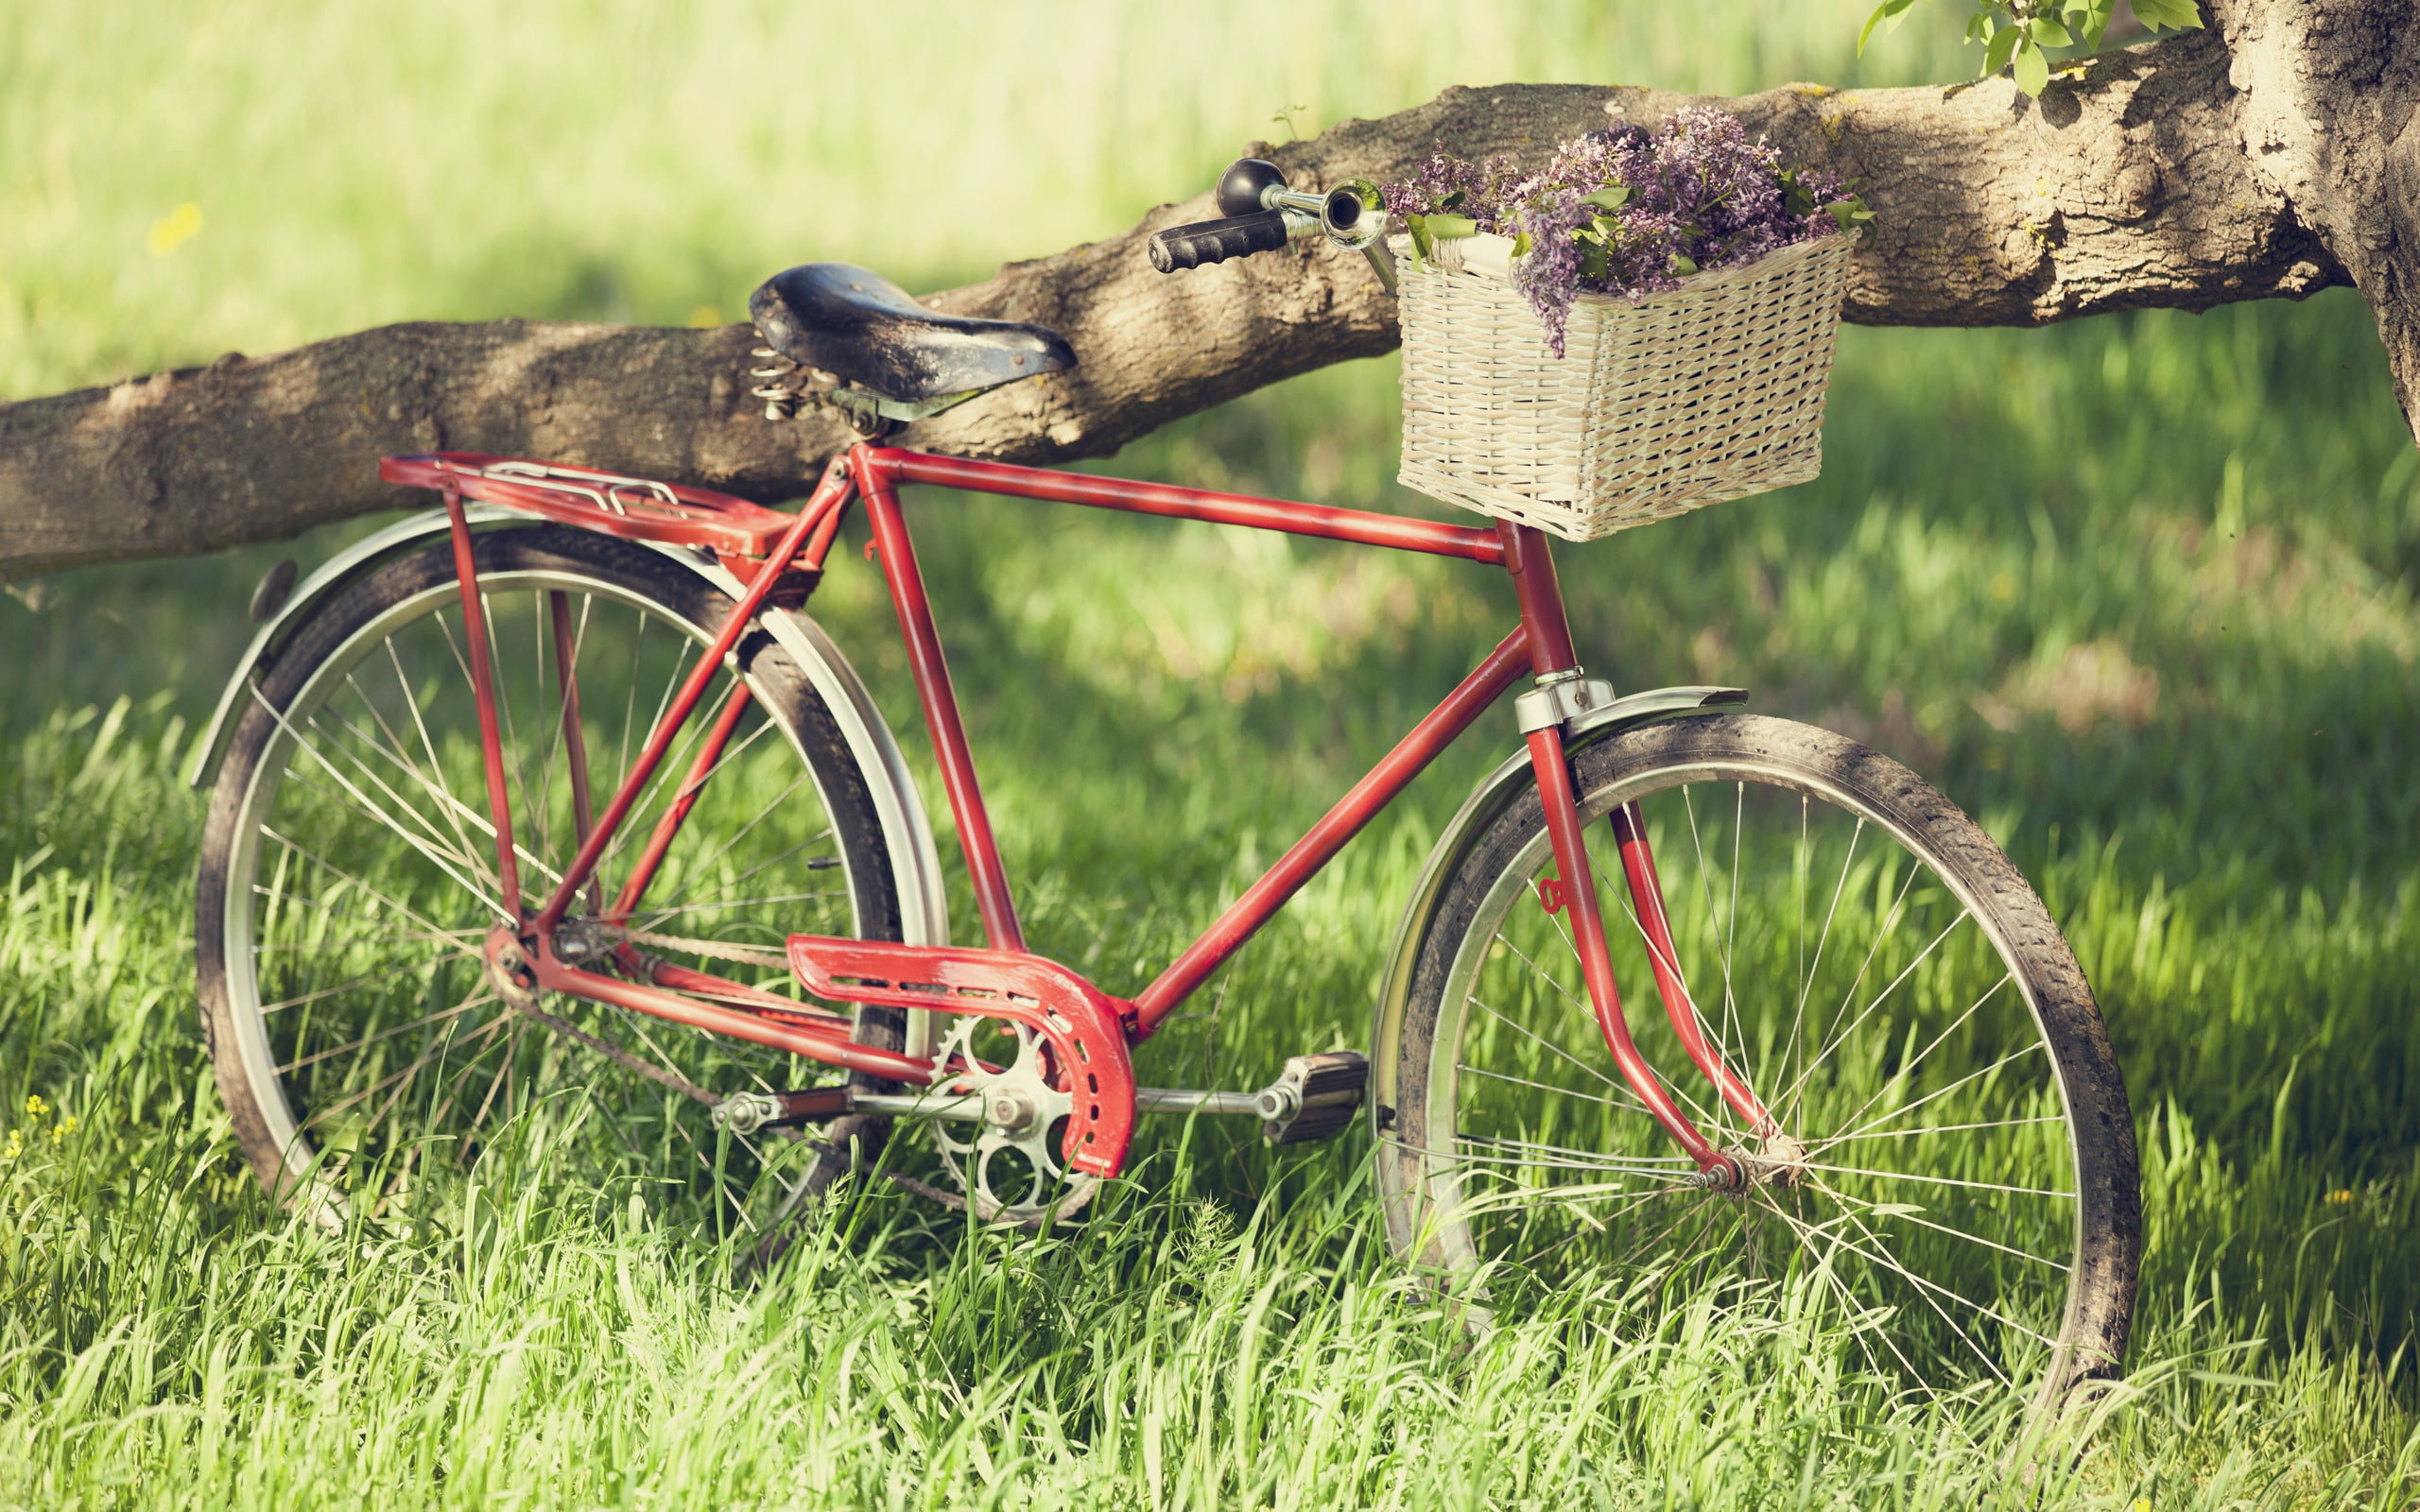 red road bike, greens, summer, grass, dream, freedom, joy, flowers